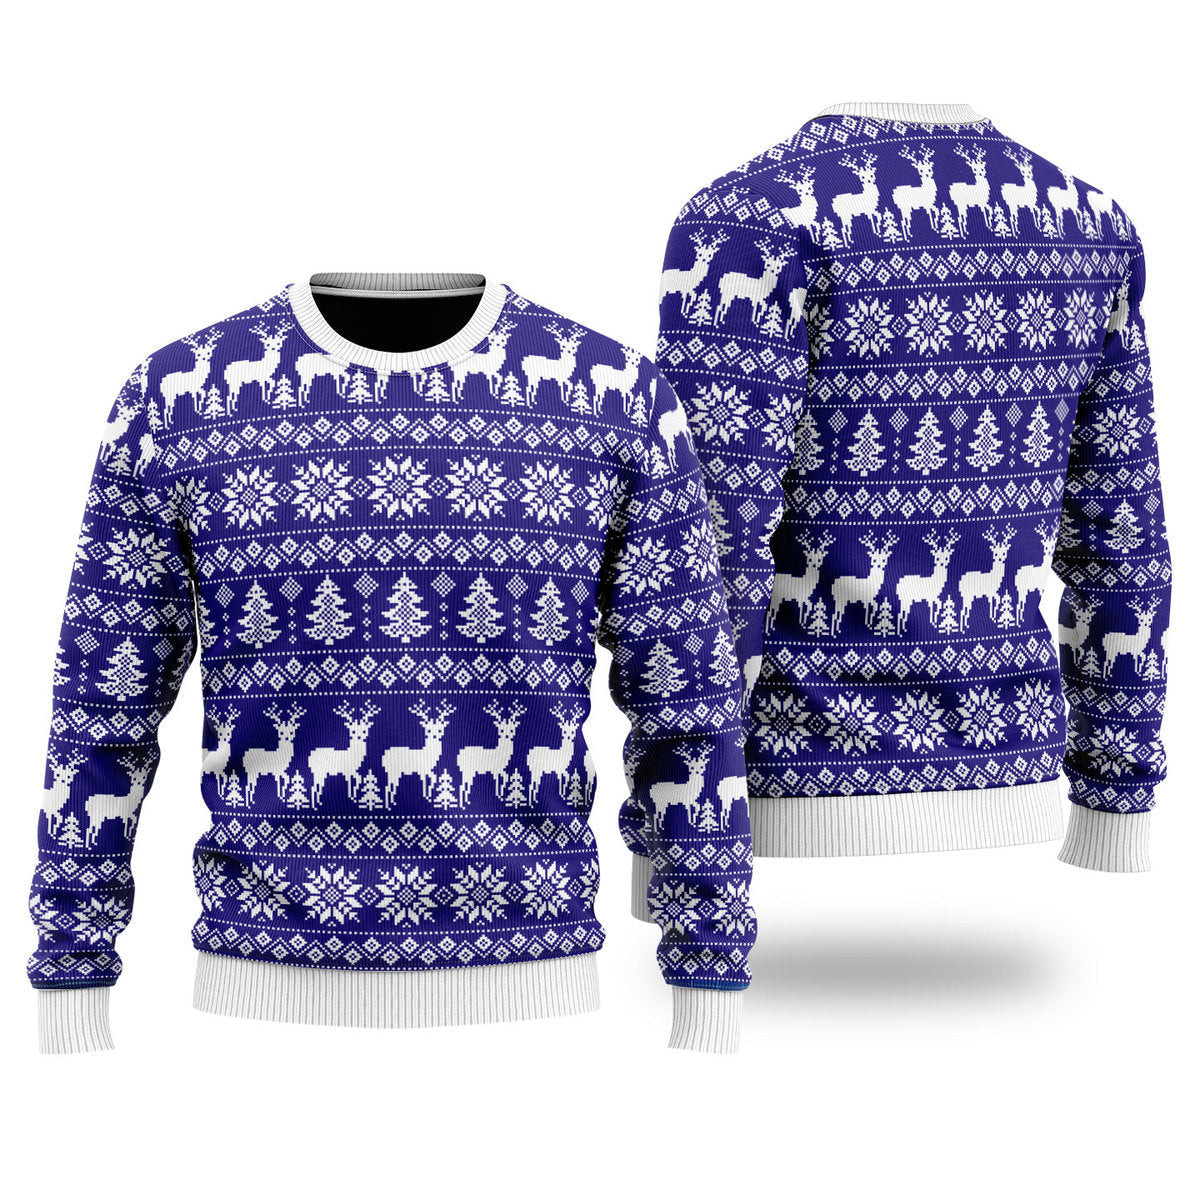 Make It Rein Deer Pattern Ugly Christmas Sweater Ugly Sweater For Men Women